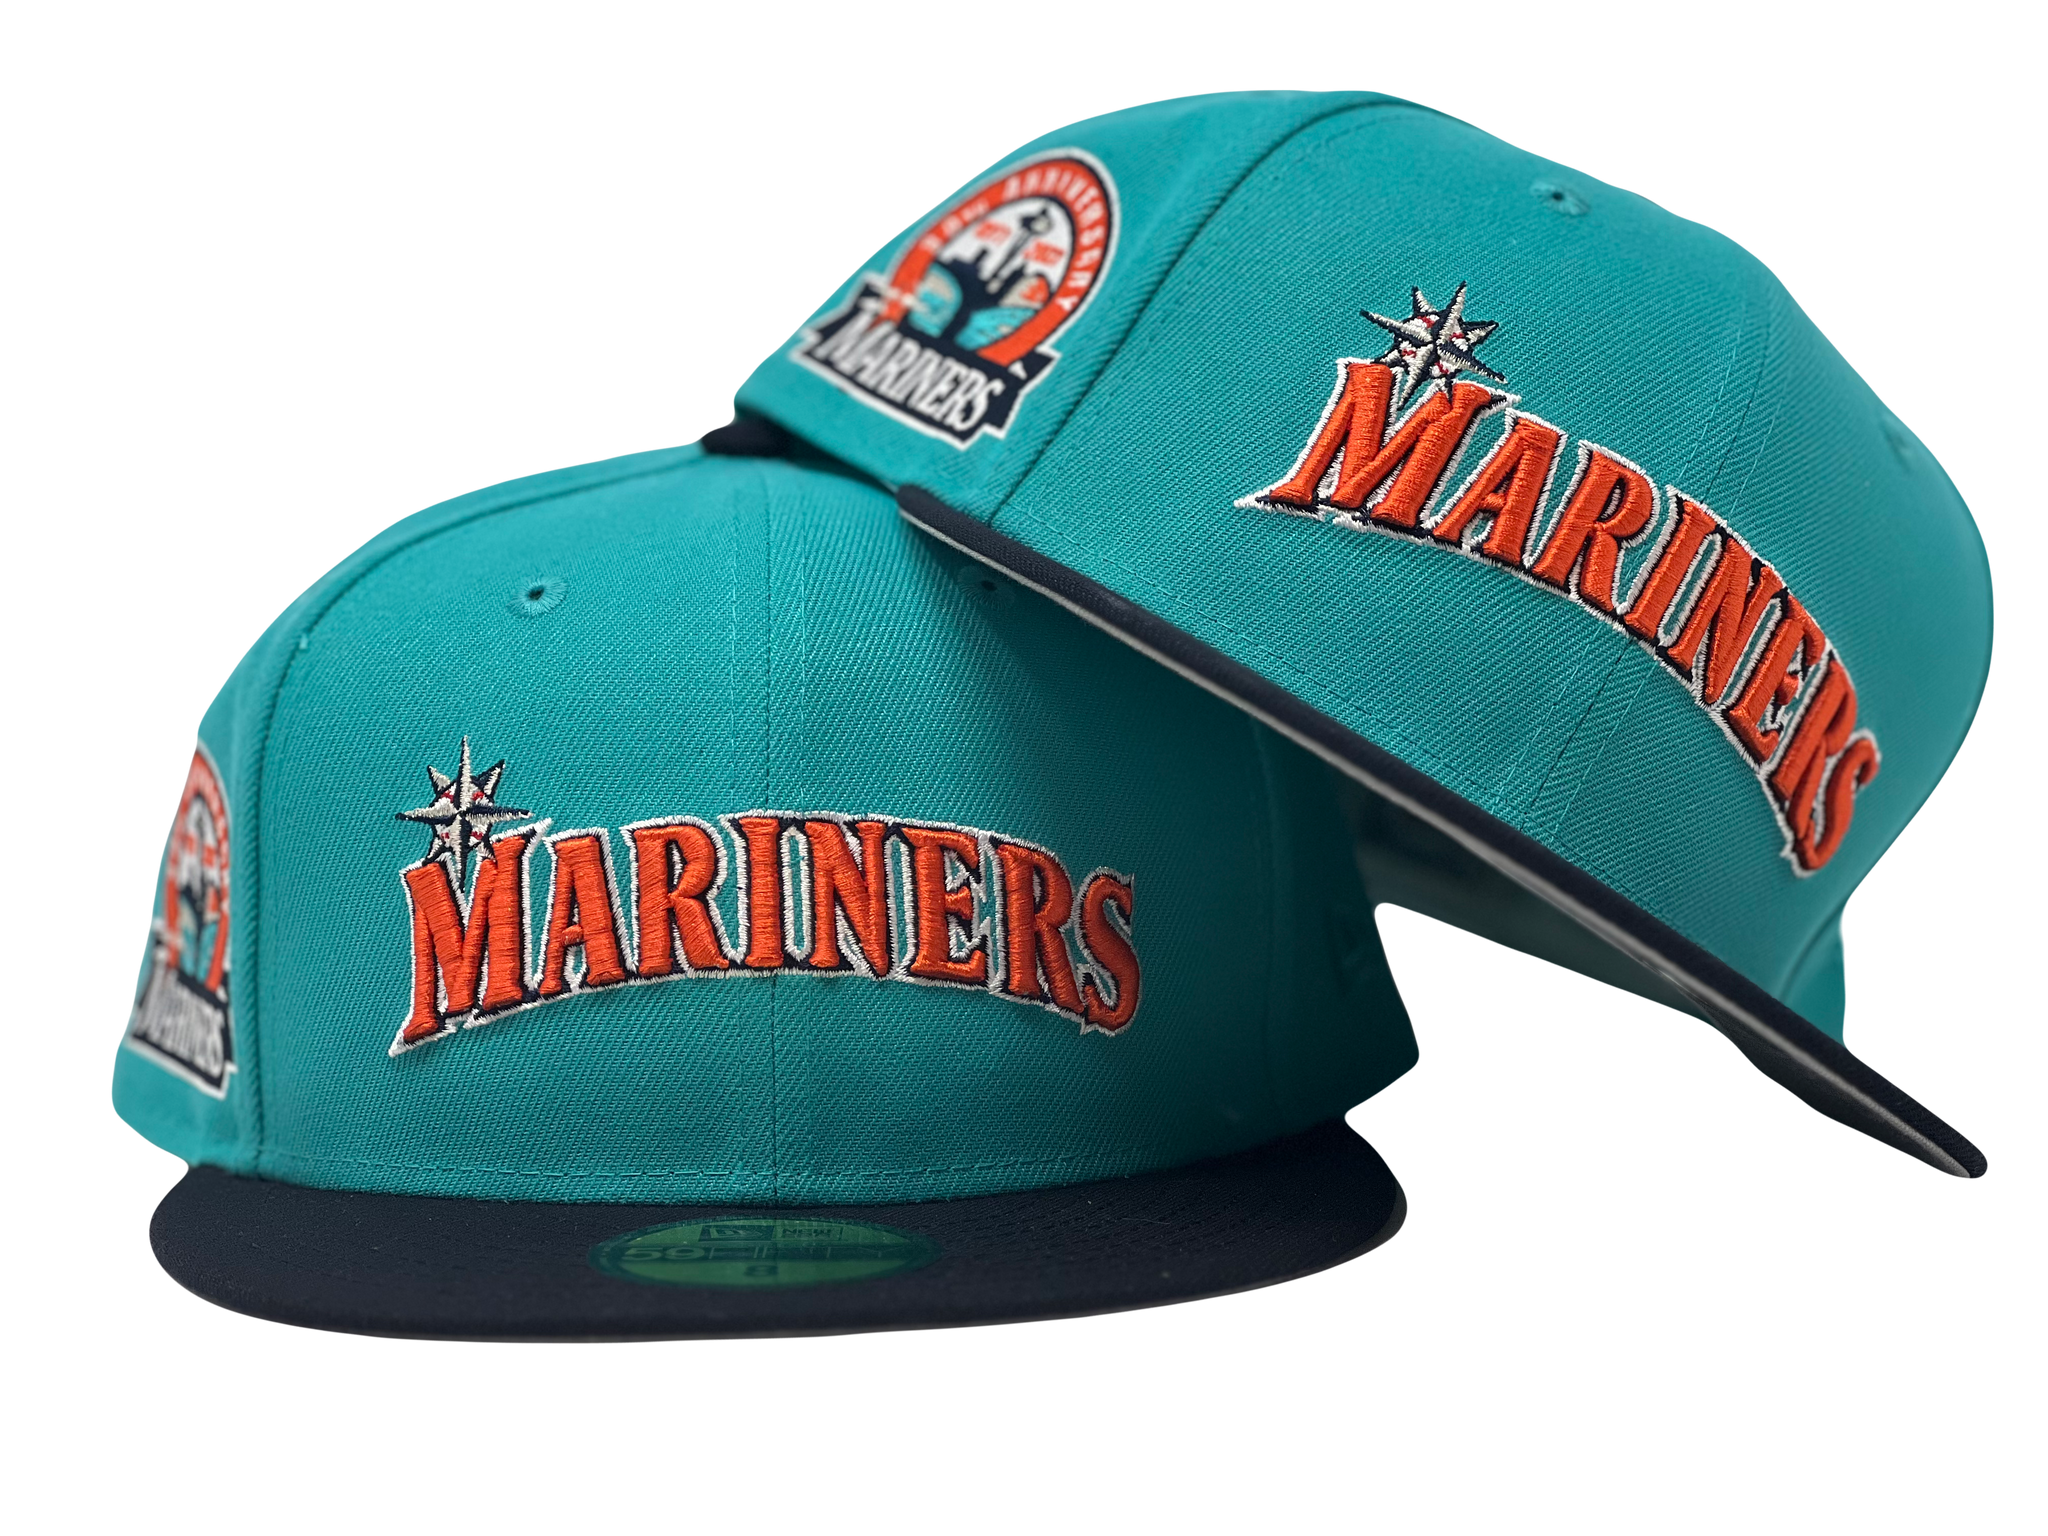 Seattle Mariners Spring Training New Era size 7 hat